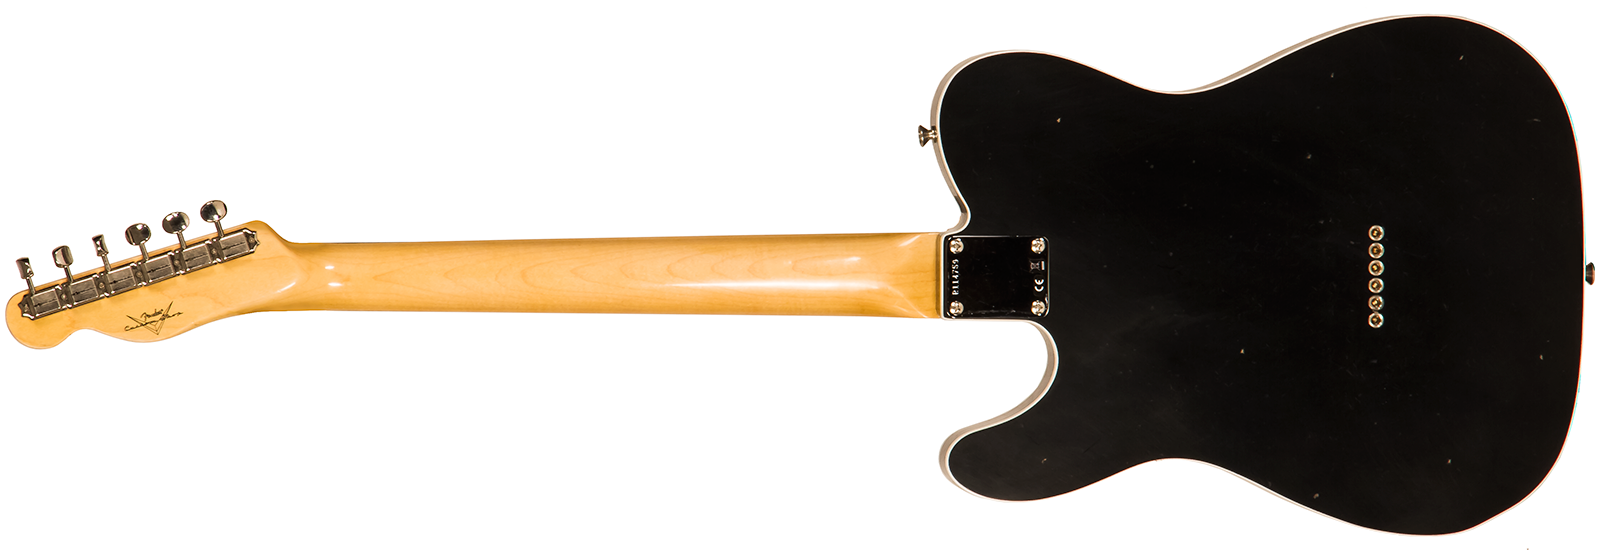 Fender Custom Shop Tele 1960 2s Ht Rw #r114759 - Journeyman Relic Black - Guitarra eléctrica con forma de tel - Variation 1